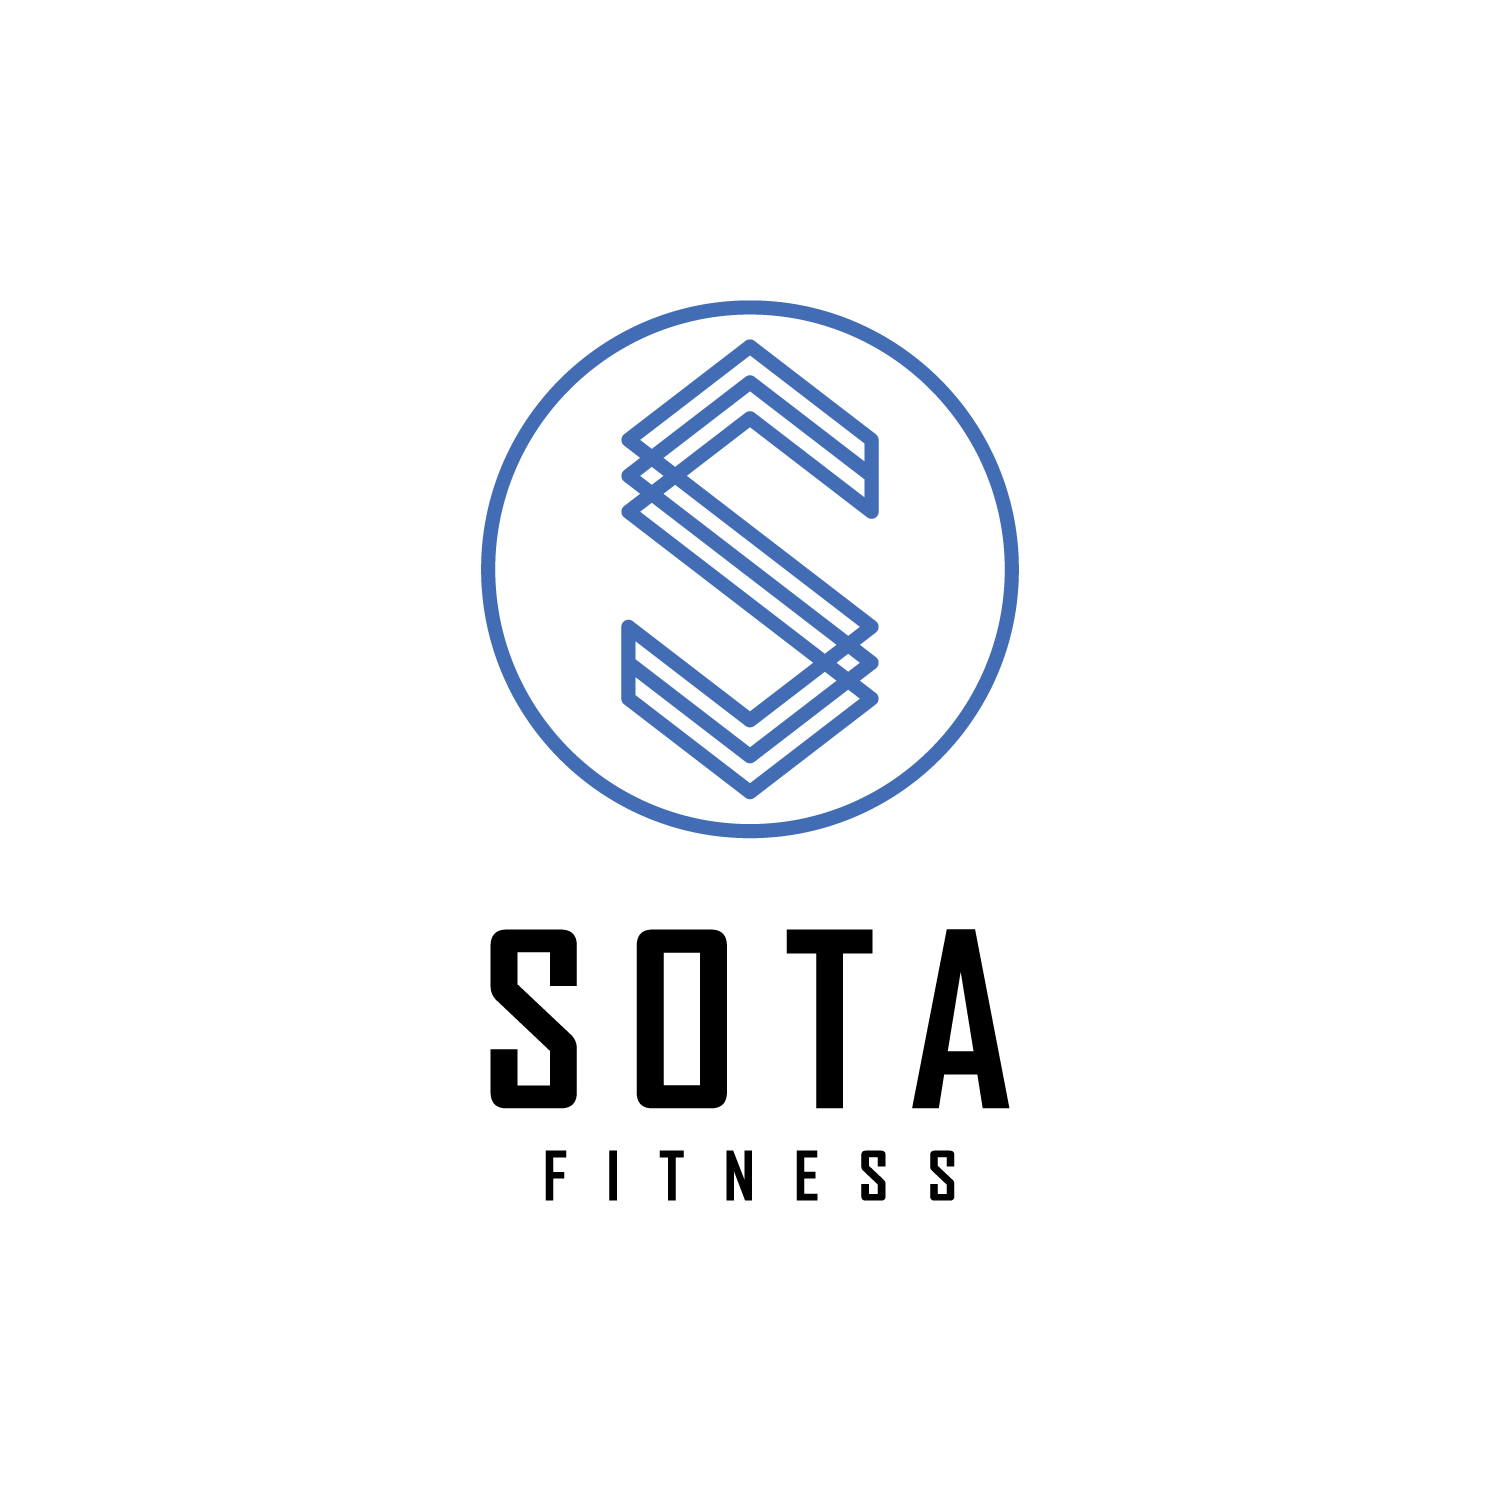 Sota Fitness logo by OLSON MCINTYRE